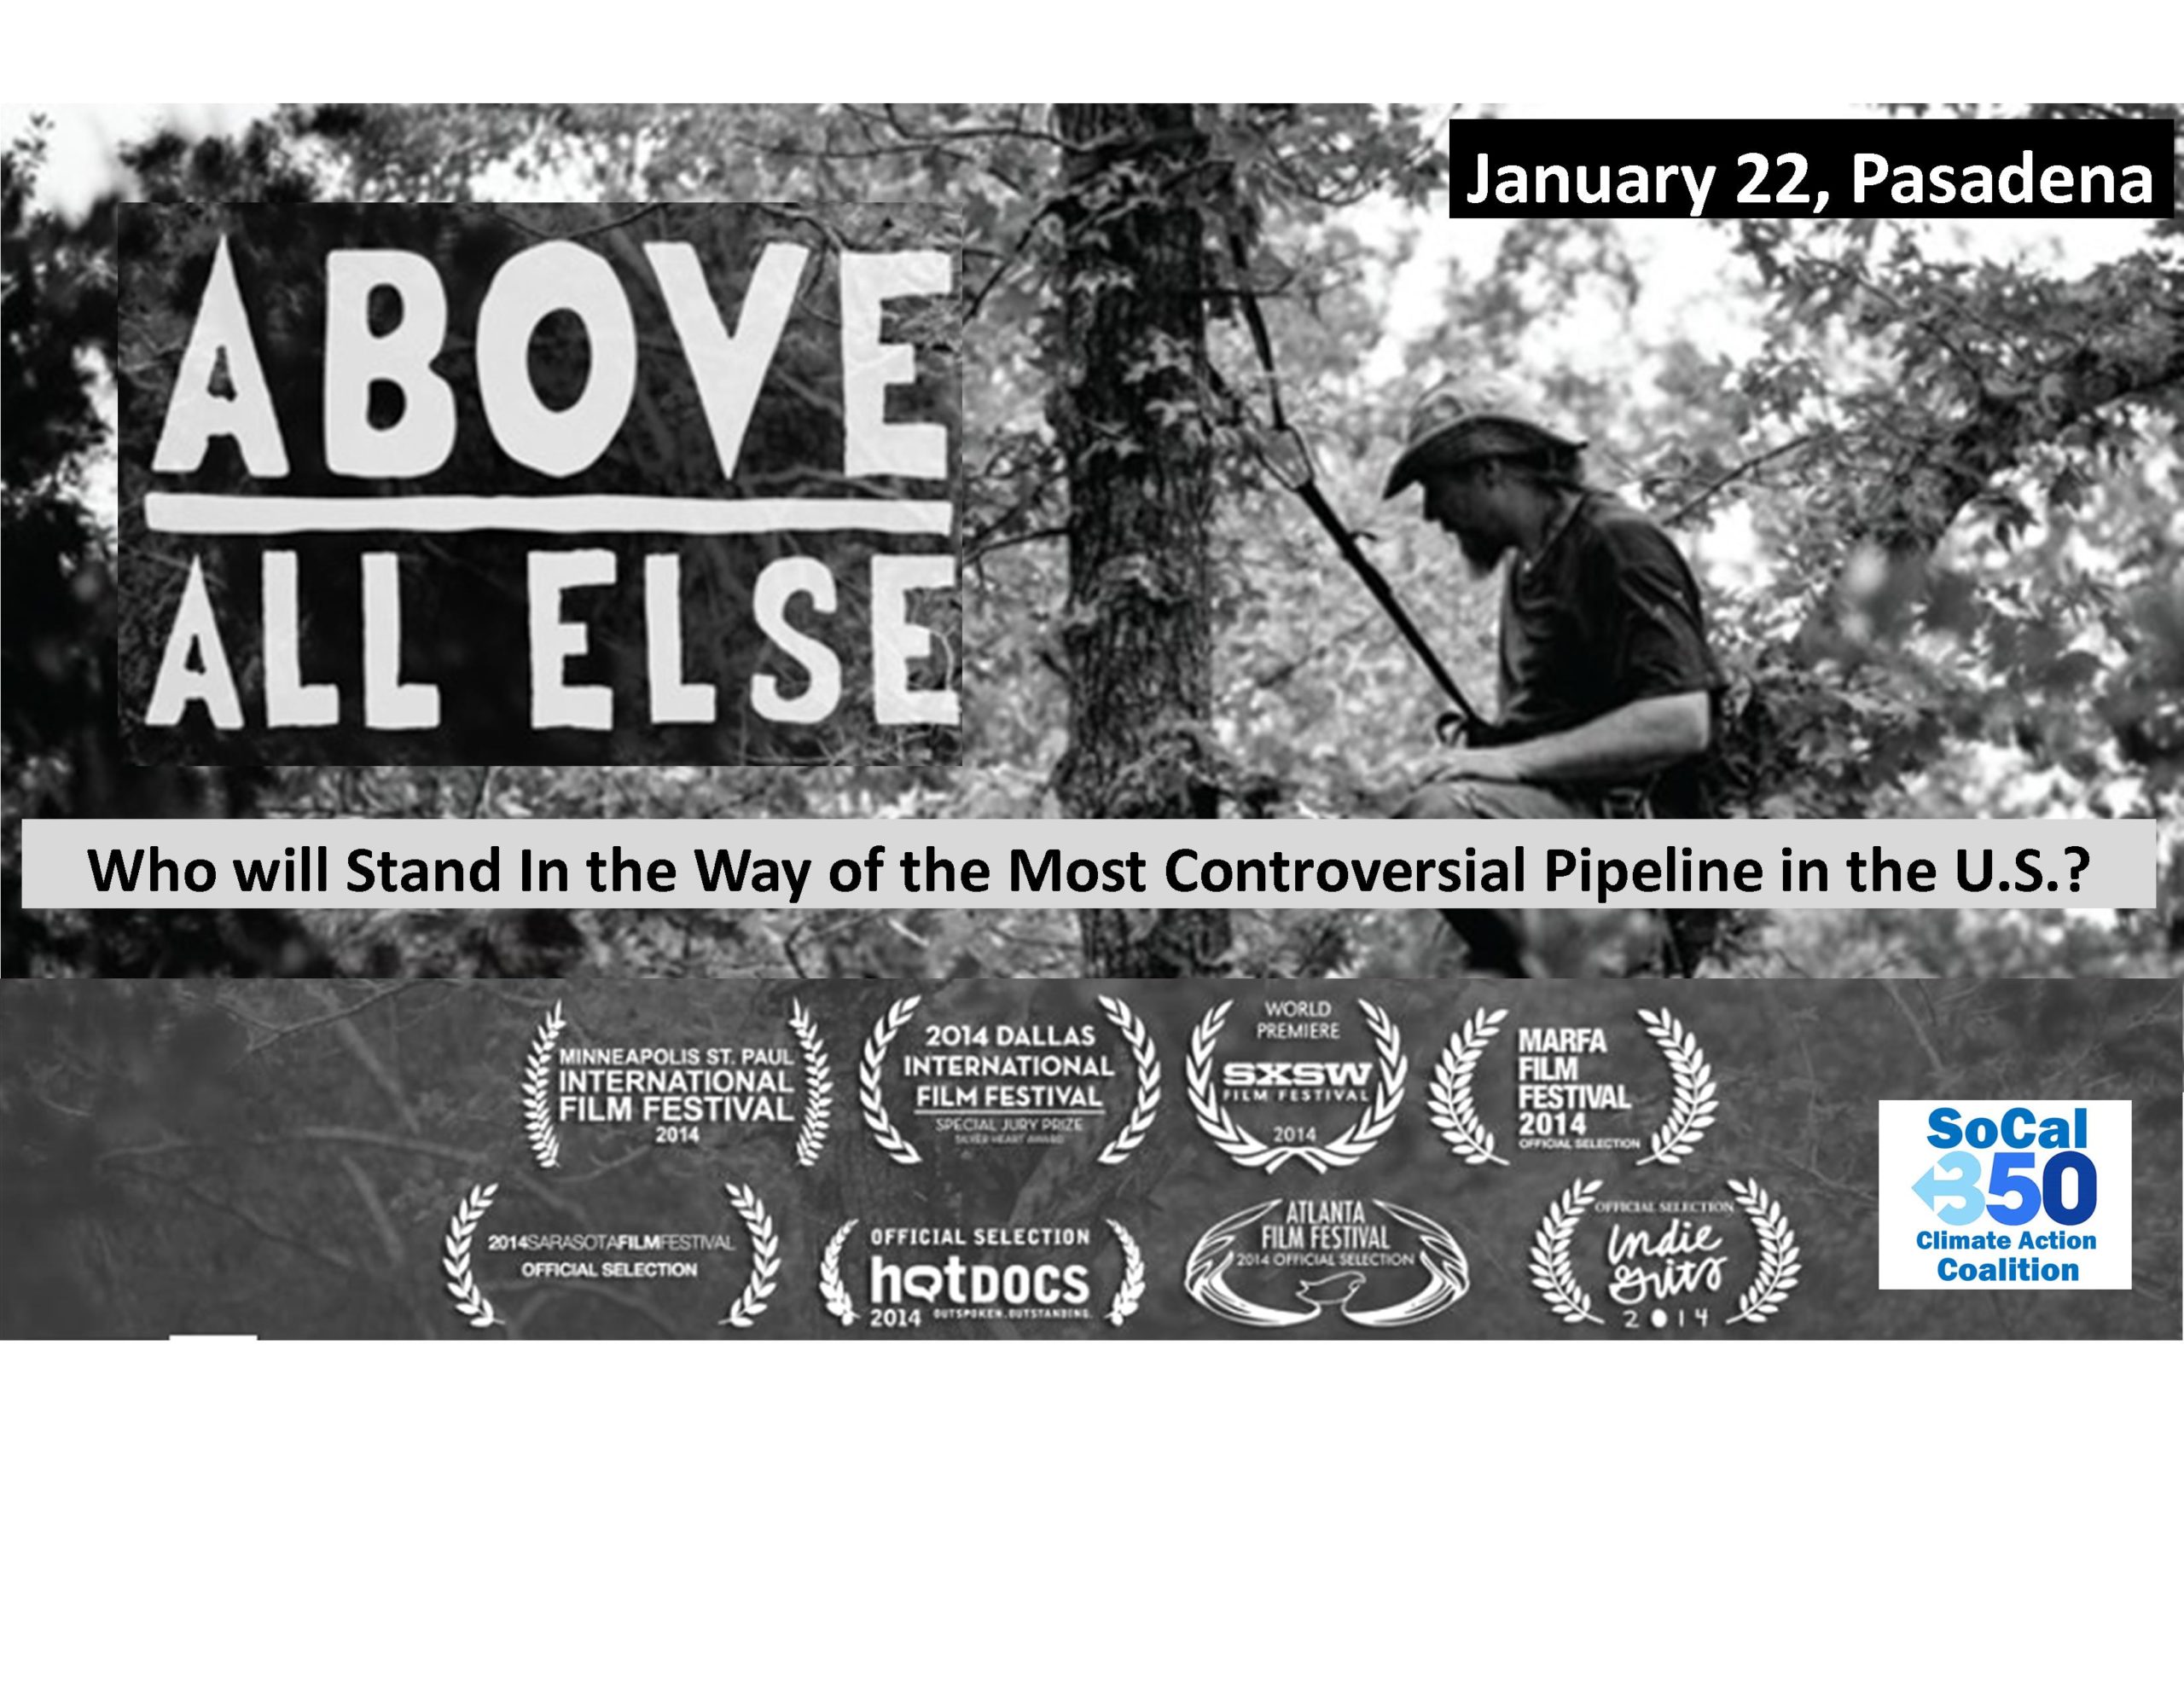 keystone xl pipeline, screening January 22 Pasadena ca, socal 350